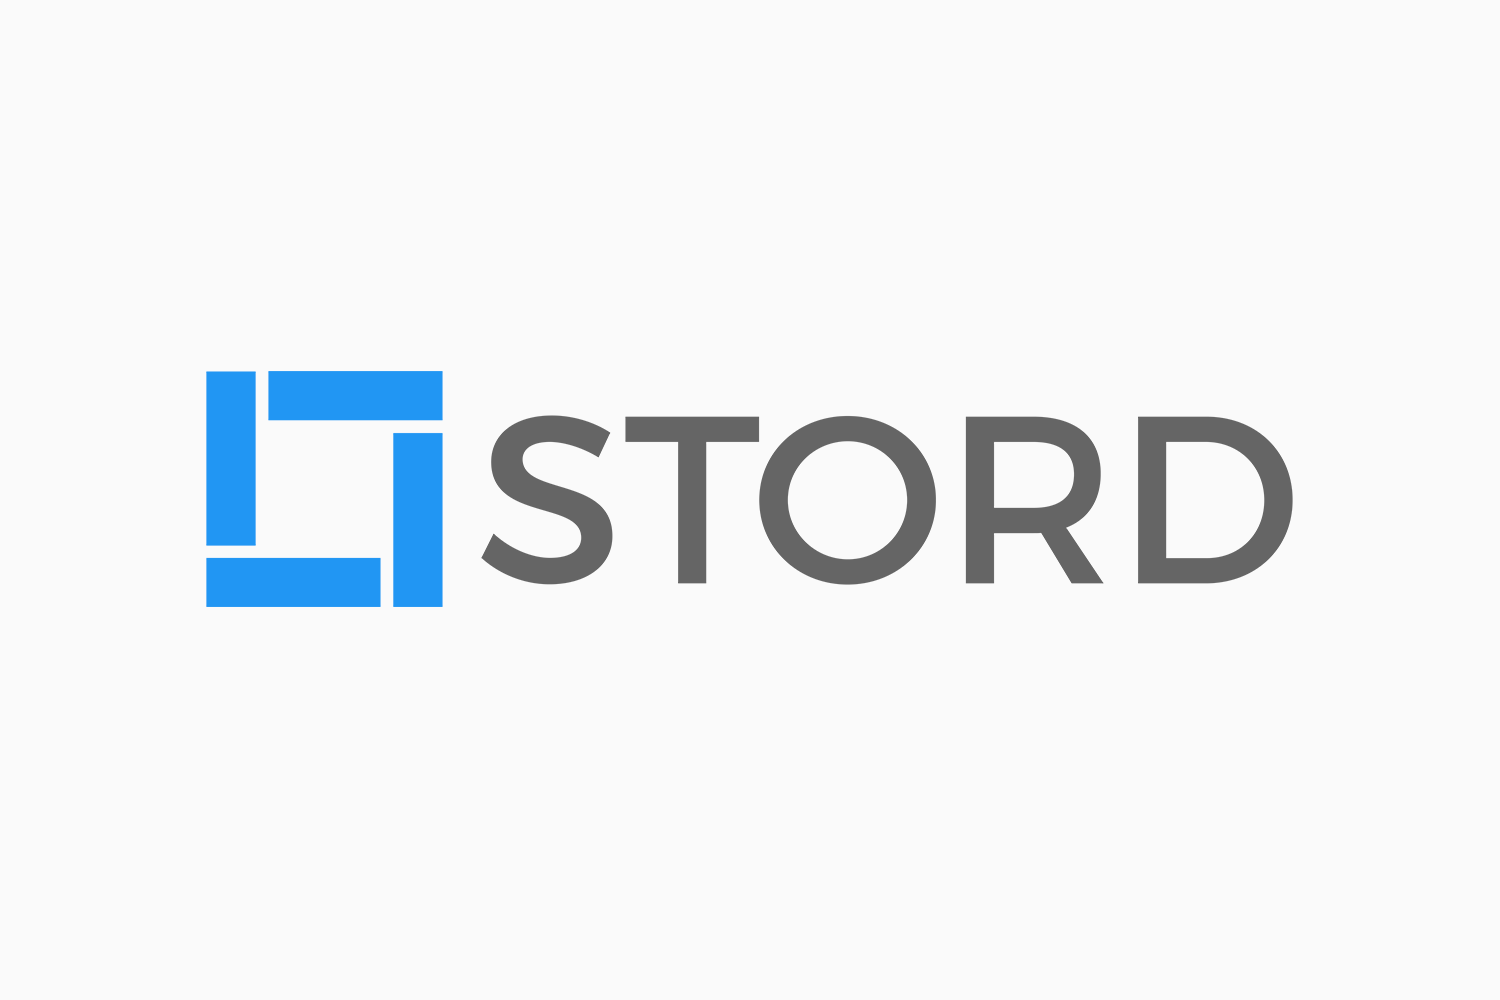 Stord raises $12.3 million to digitize warehousing and distribution